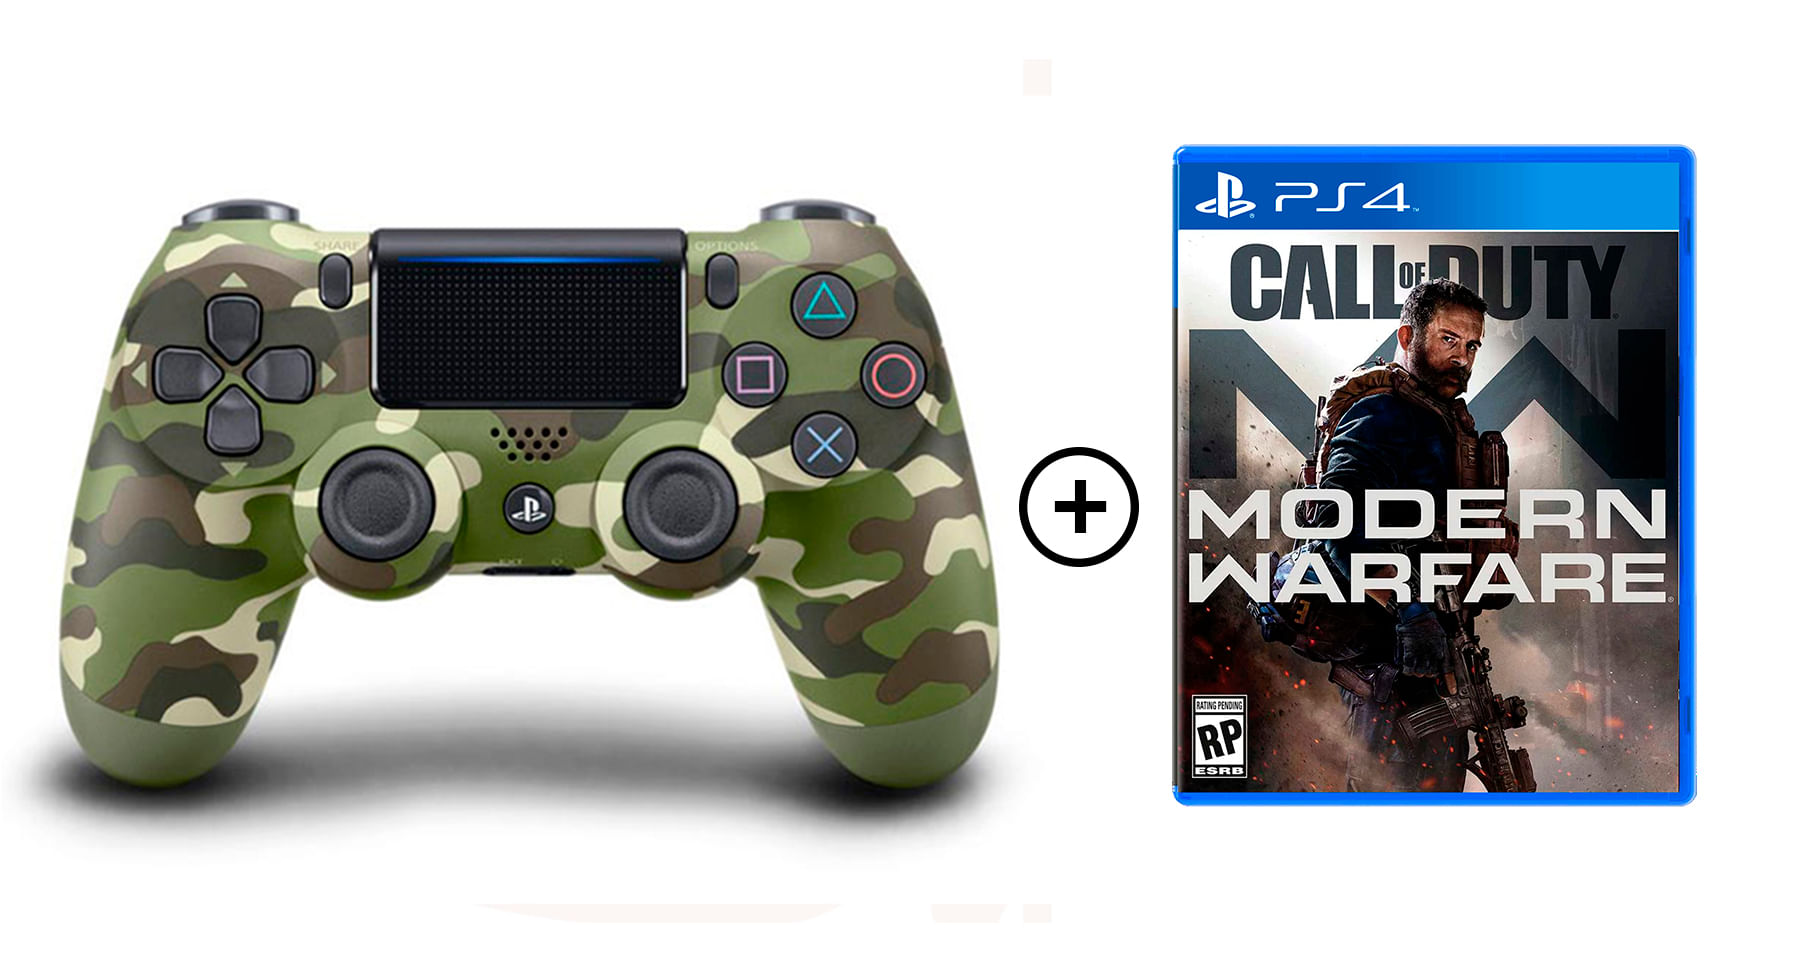 Mando Ps4 Dualshock 4 Camuflado Verde + Call of Duty Modern Warfare